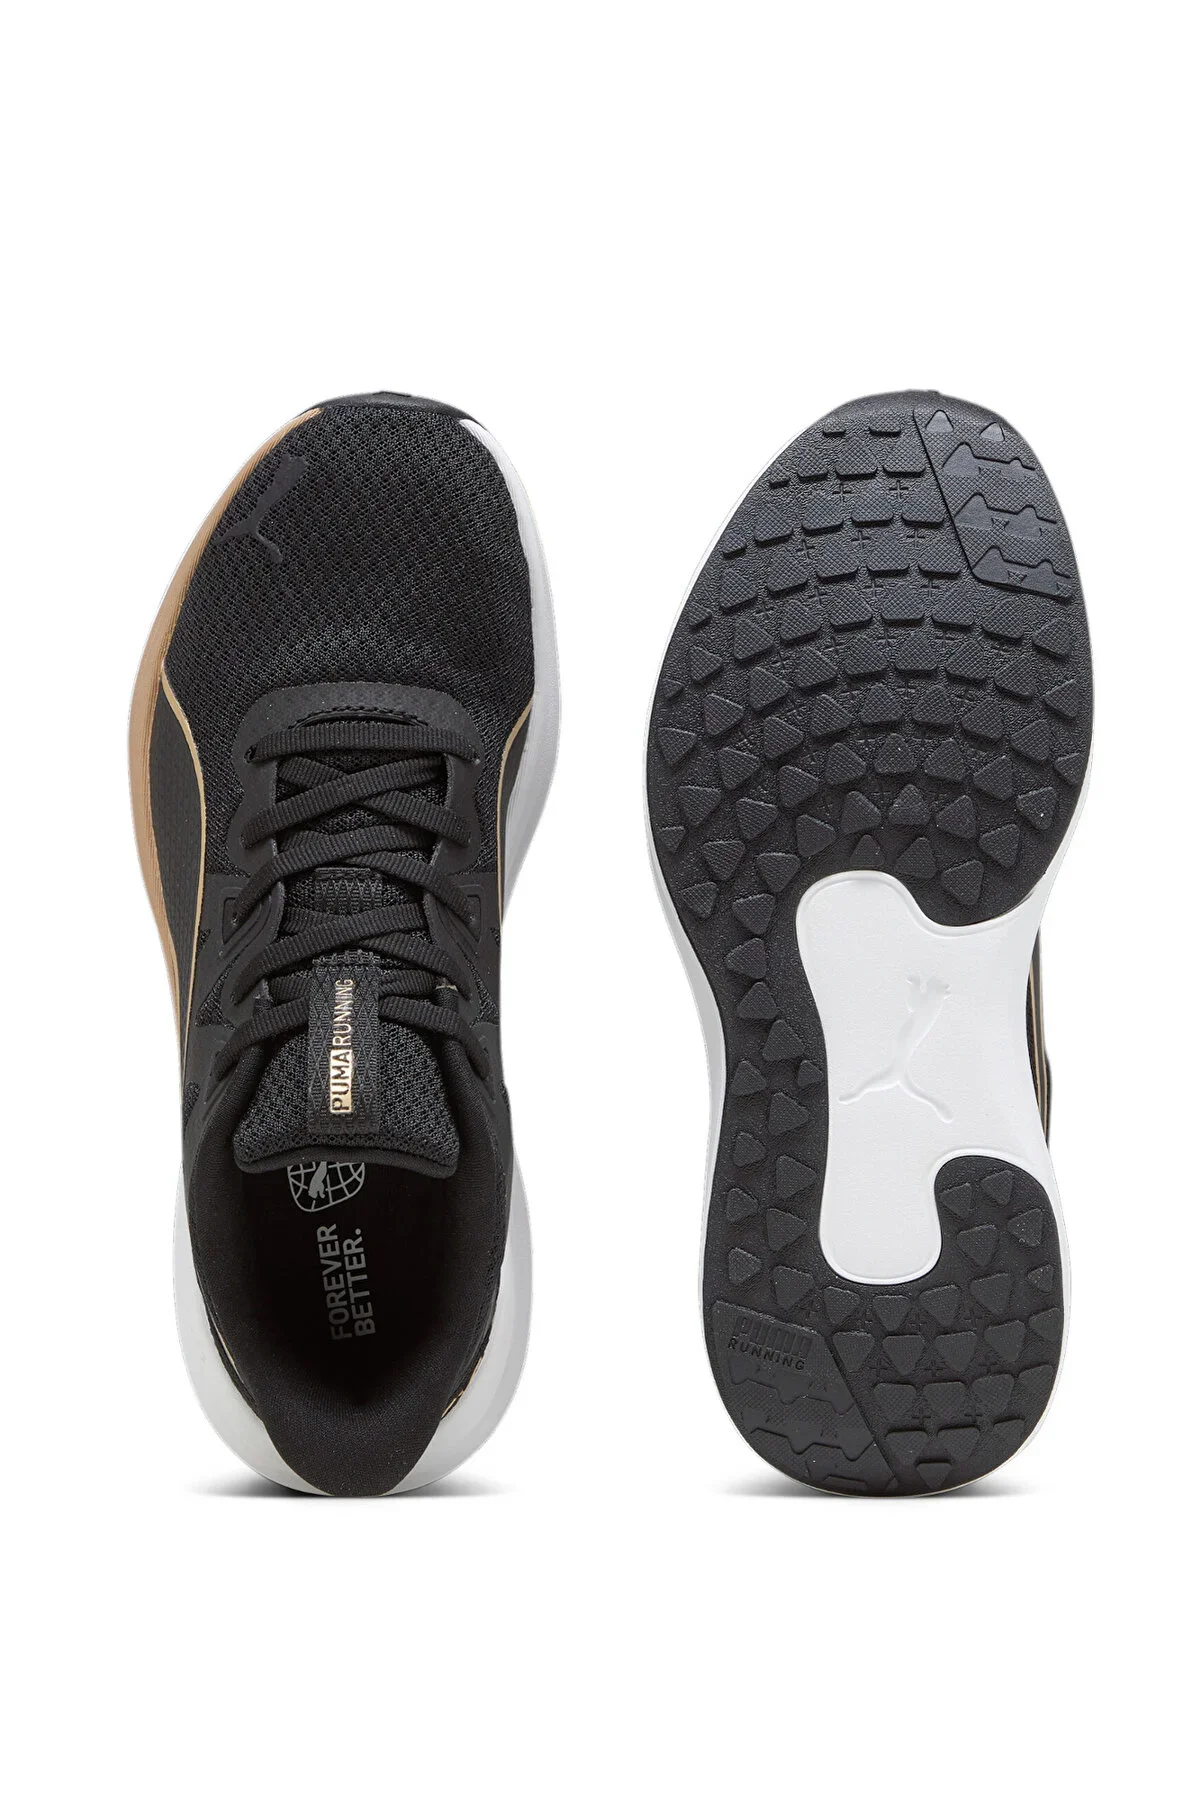 Reflect Lite Molten Metal Wns Kadın Spor Ayakkabı-Siyah - 6